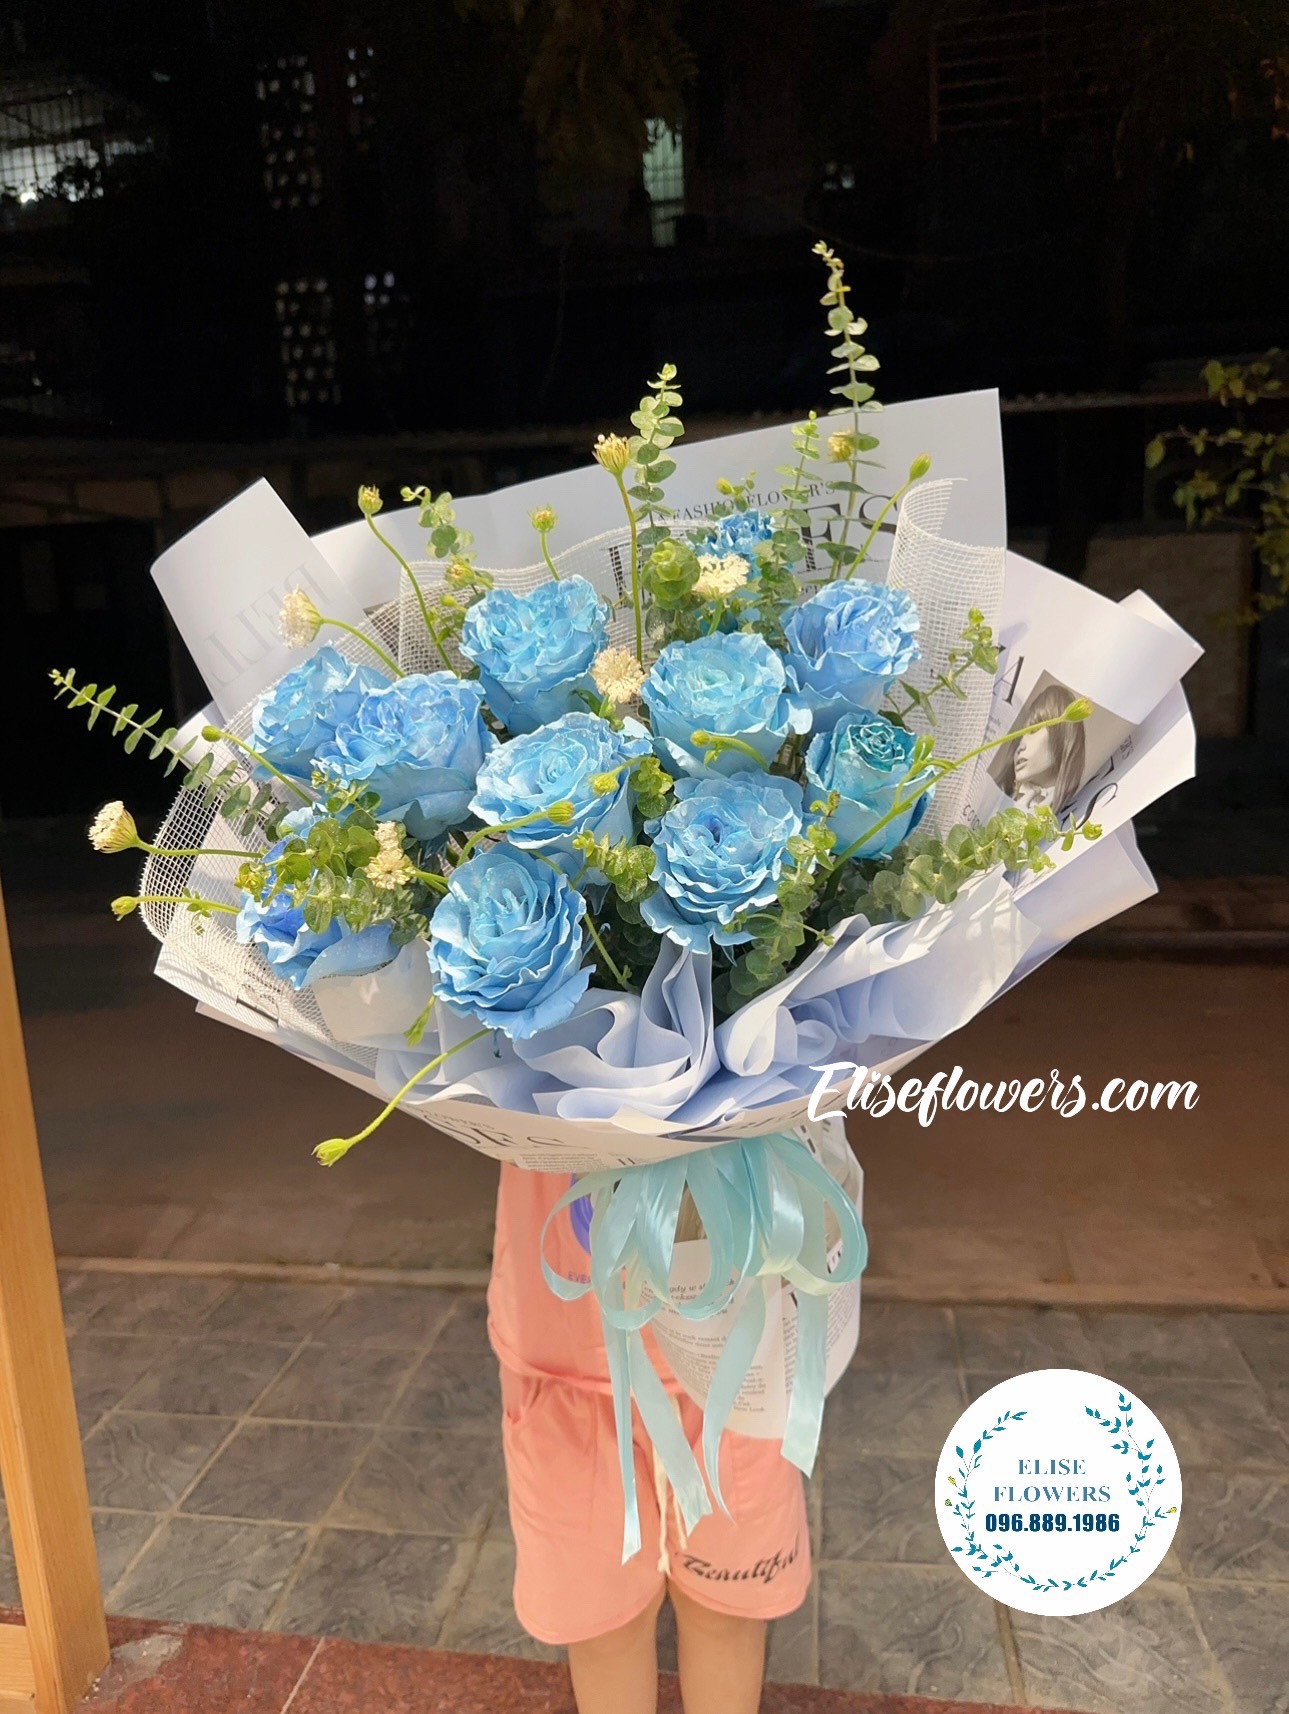 HOA NHẬP KHẨU HÀ NỘI. Bó hoa hồng xanh Ecuador nhập khẩu đẹp ở Hà Nội.